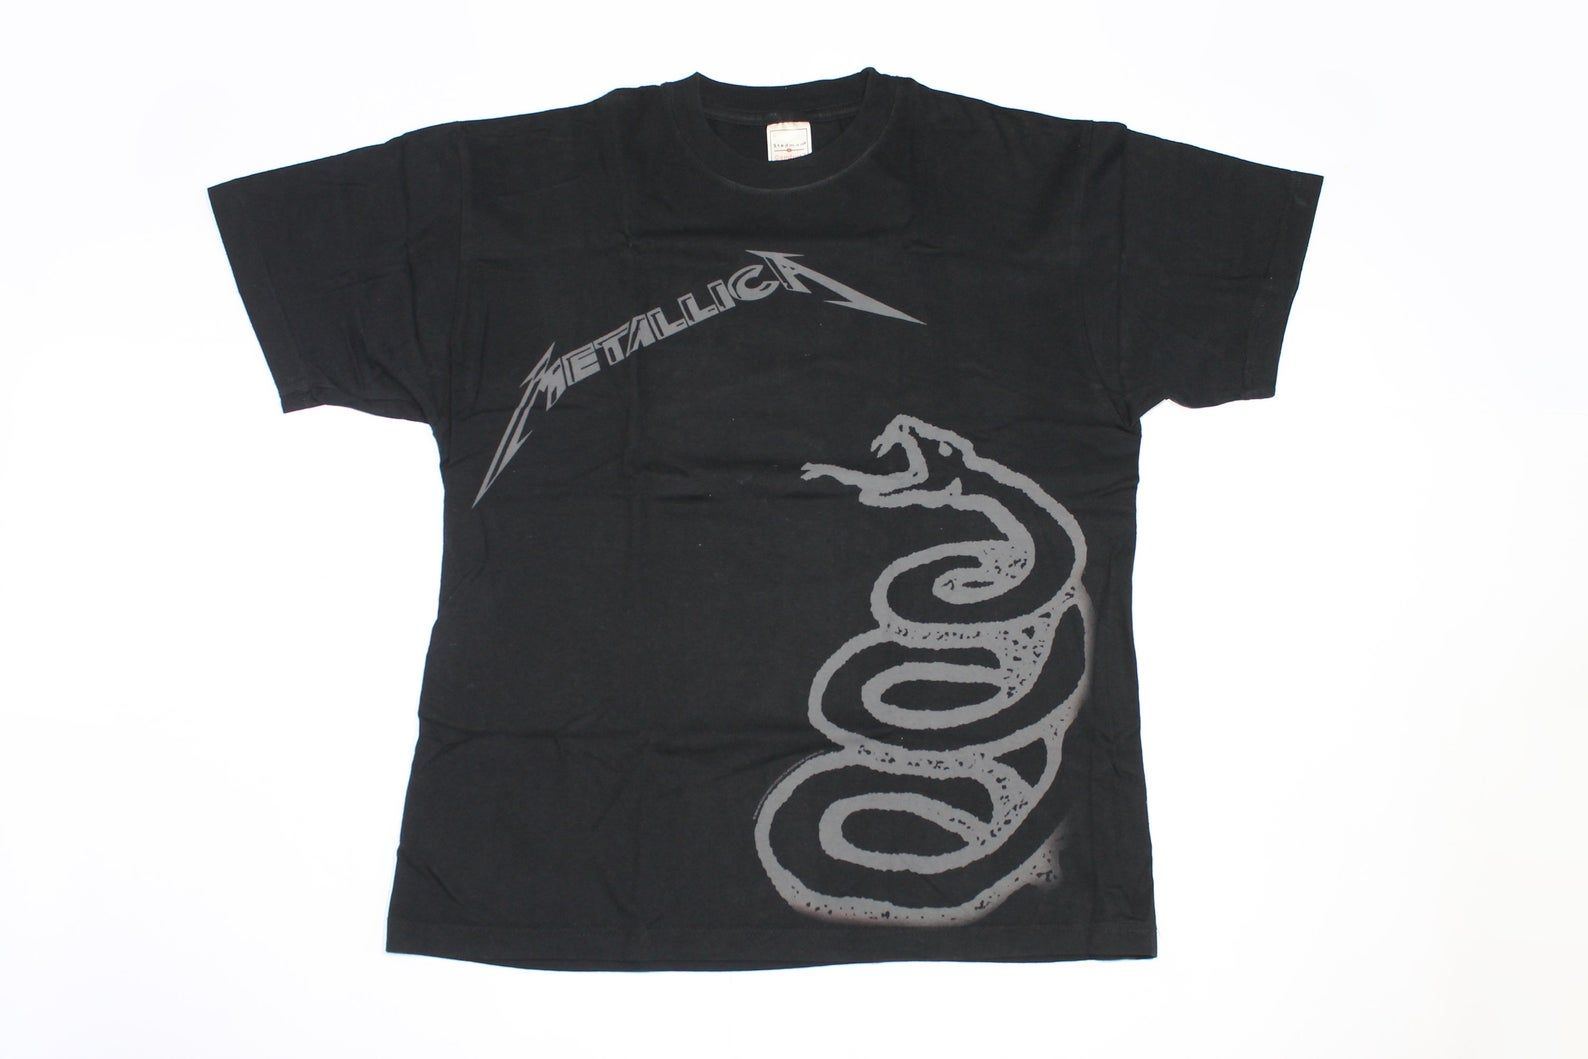 Metallica Shirt American Heavy Metal Band Shirt Thrash Metal S ...